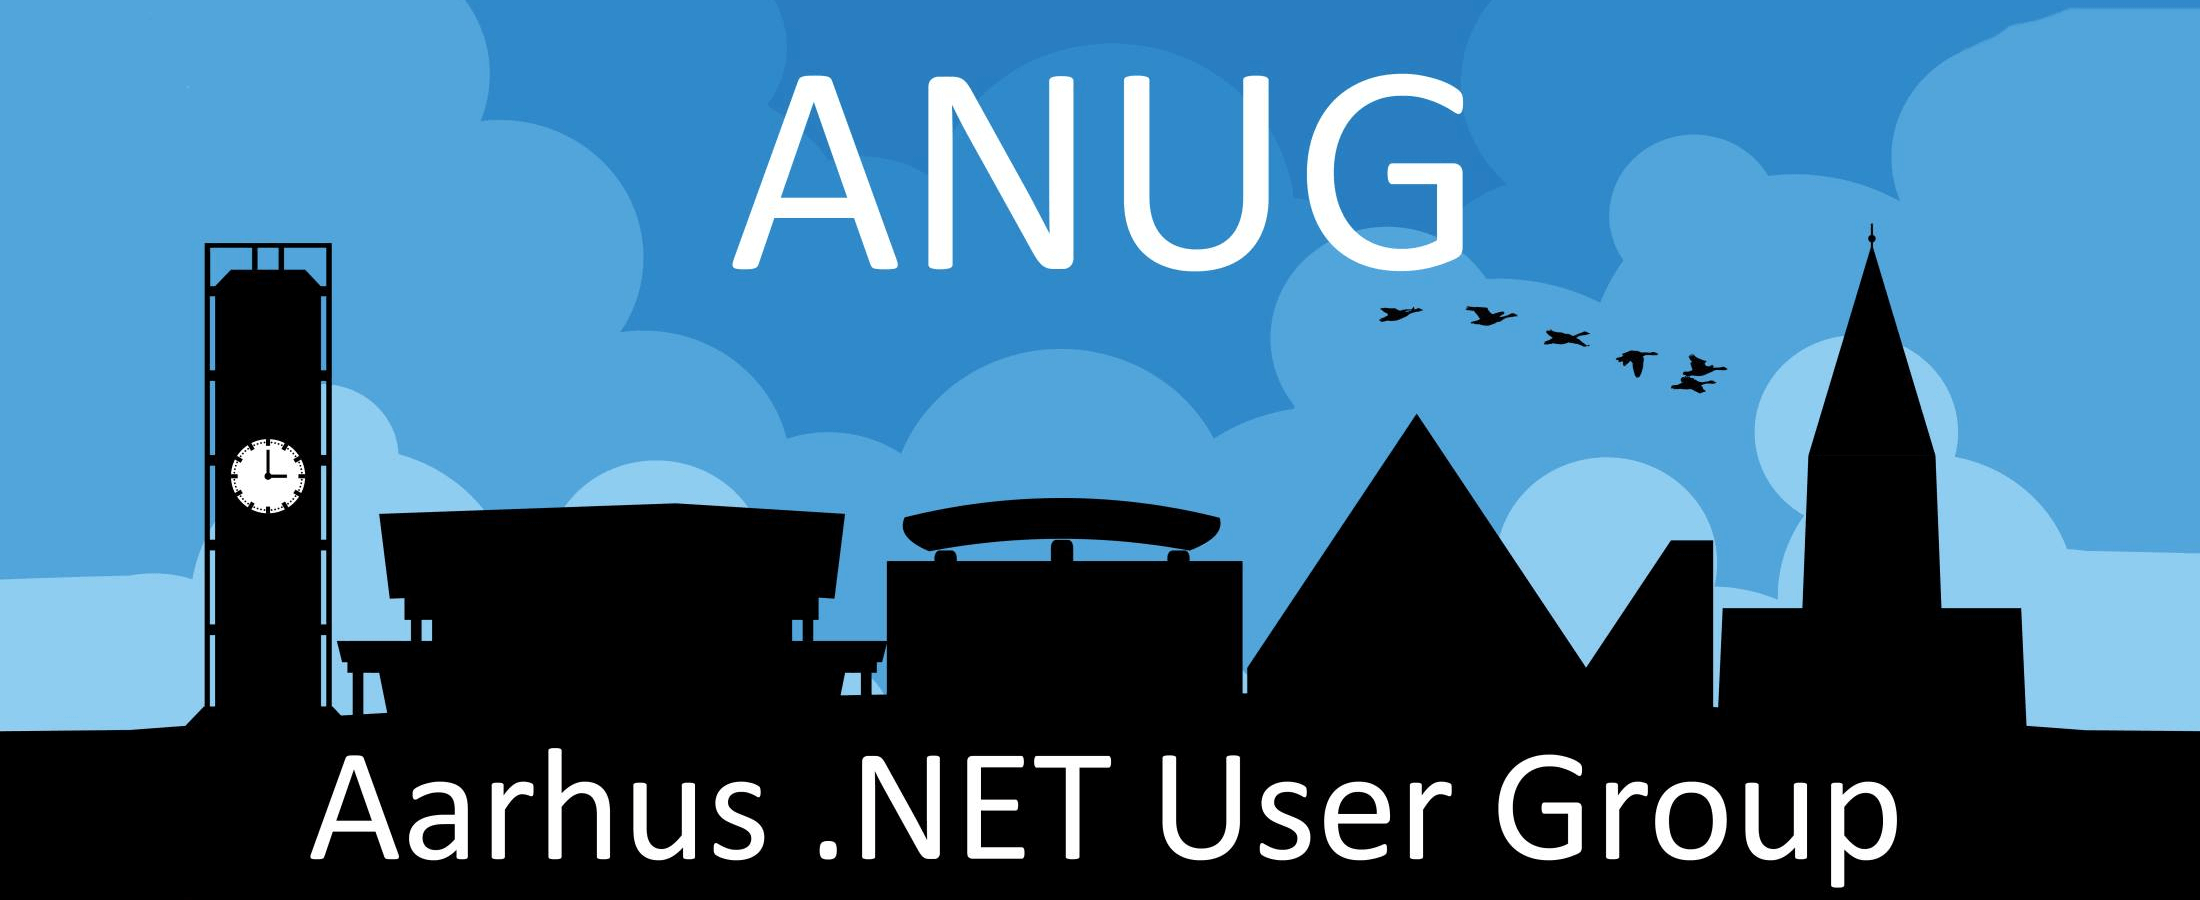 Local .NET user groups